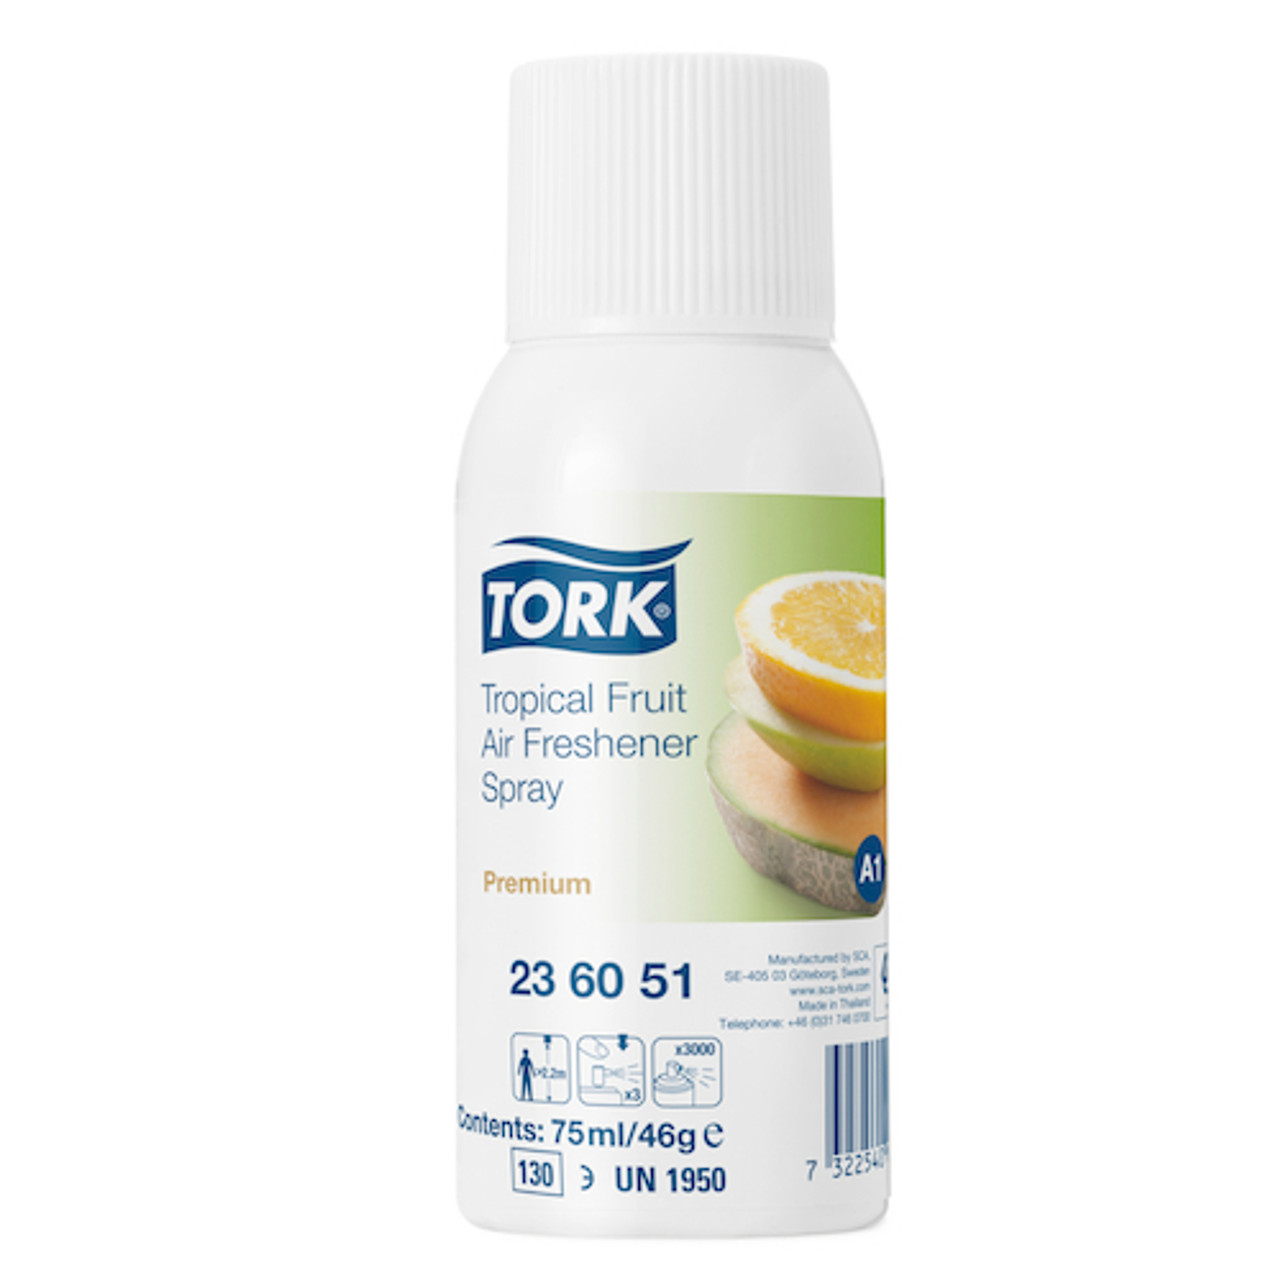 Tork Tropical Fruit Air Freshener Spray A1 System 75ml (TK236051)
Tork Products